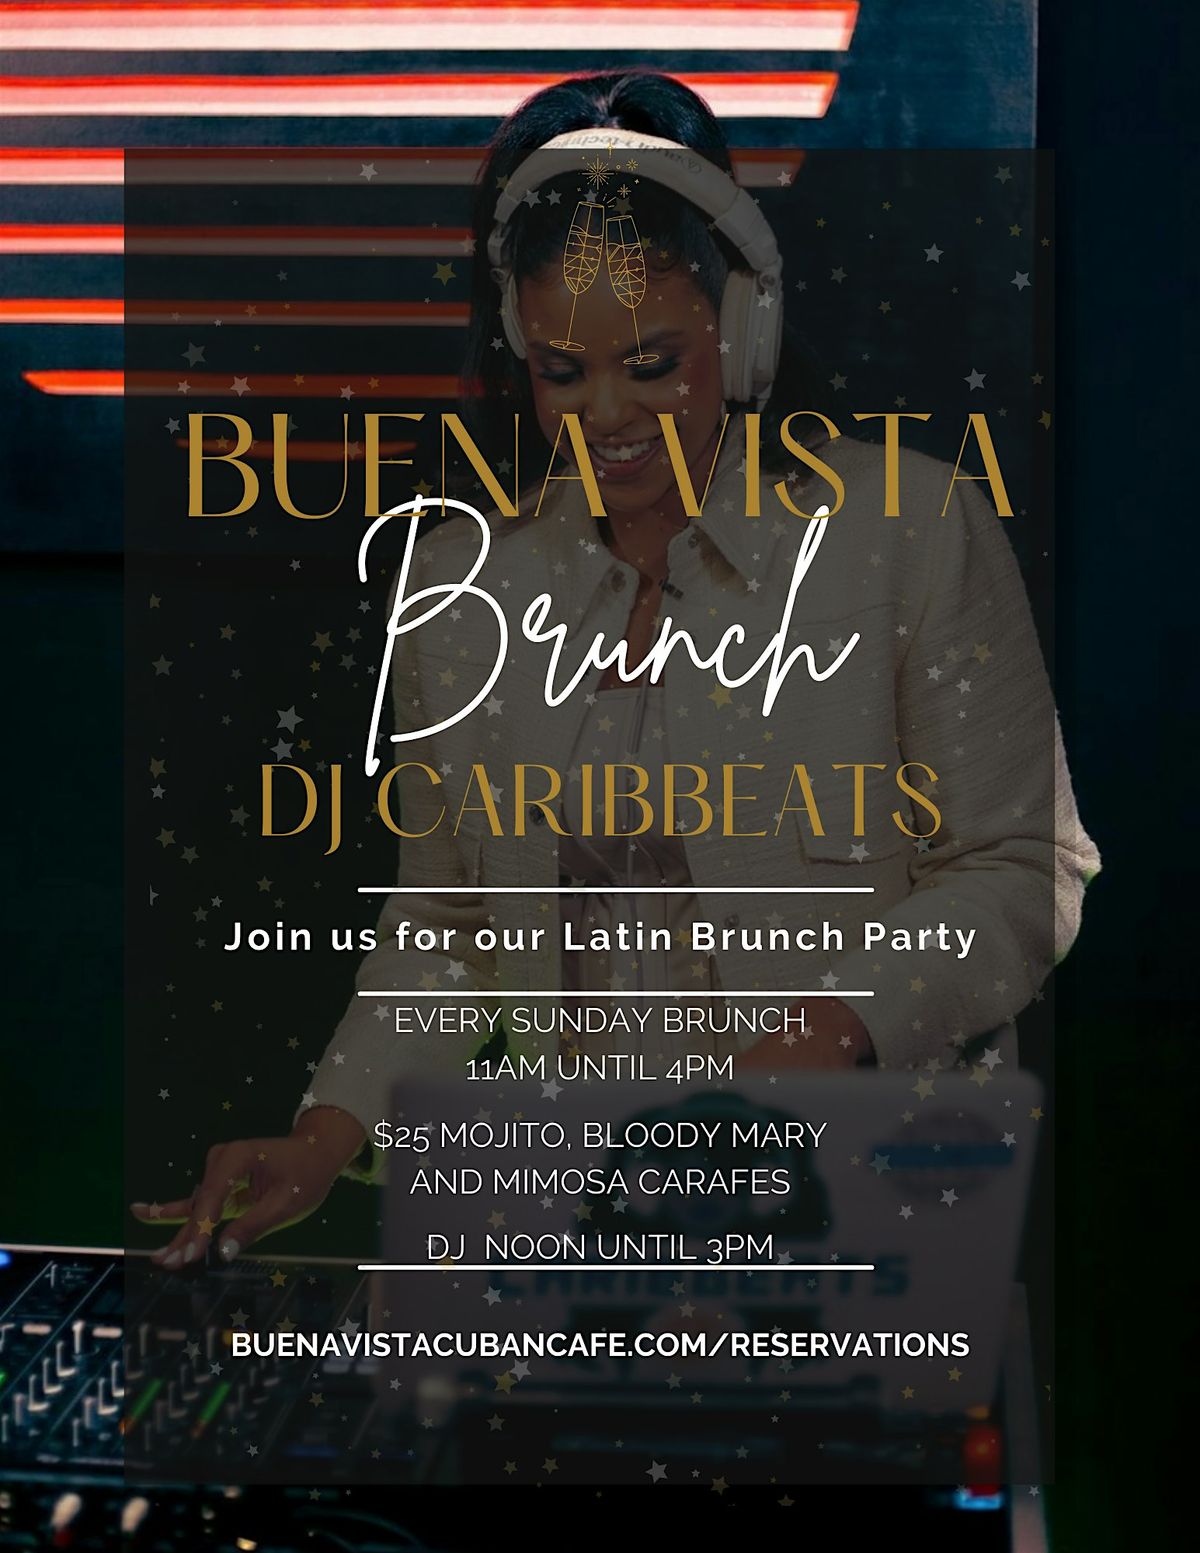 Cuban Brunch Party with DJ Caribbeats